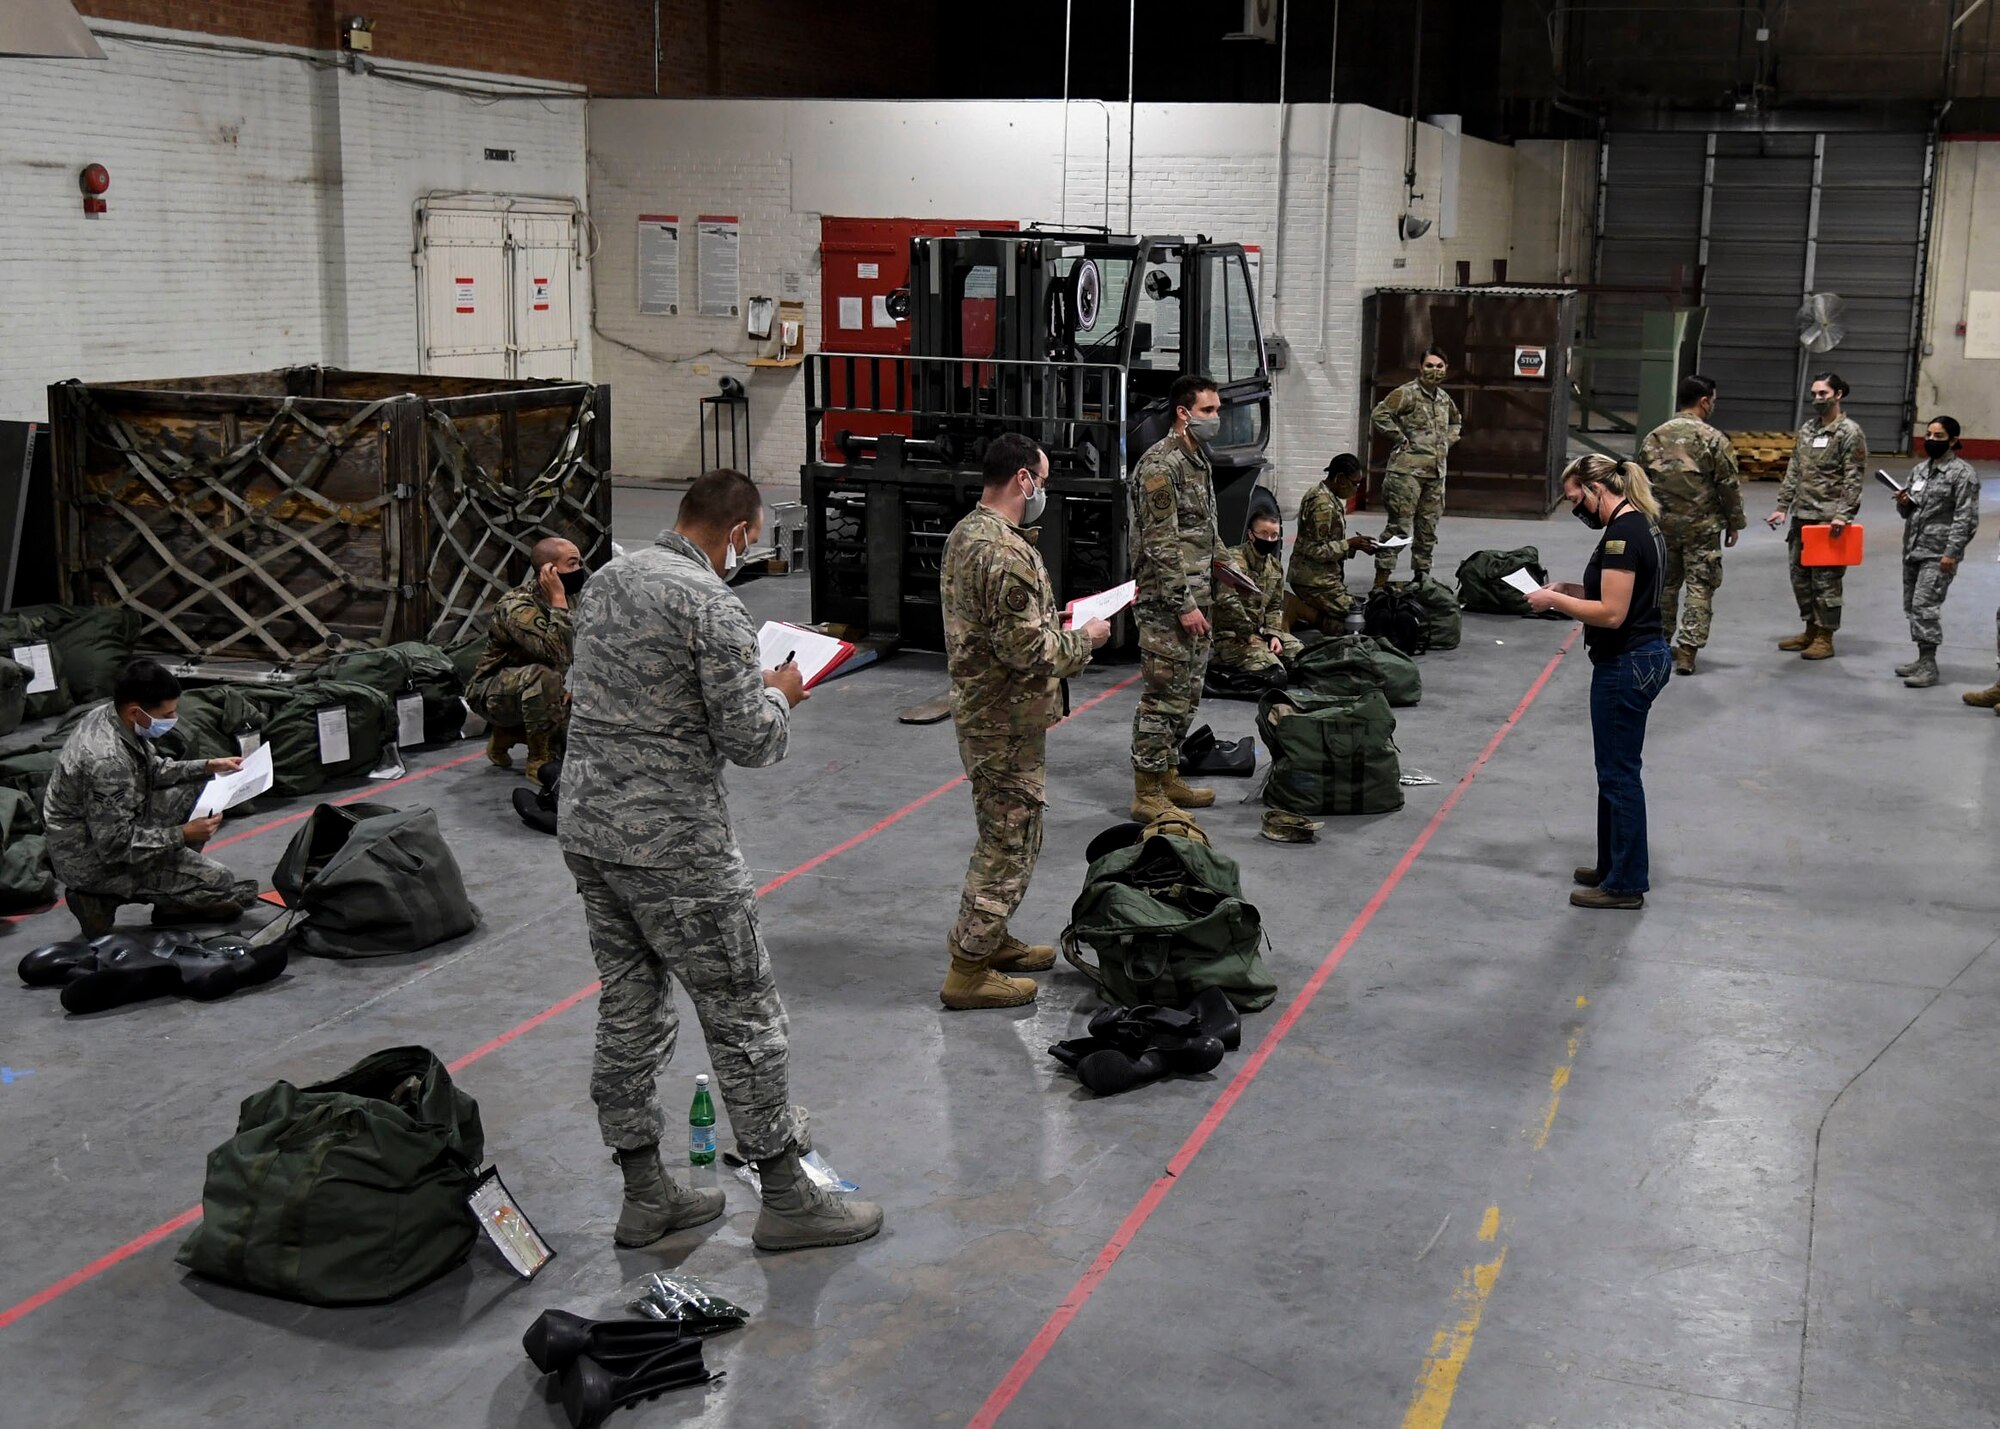 Airmen check equipment before deployment.